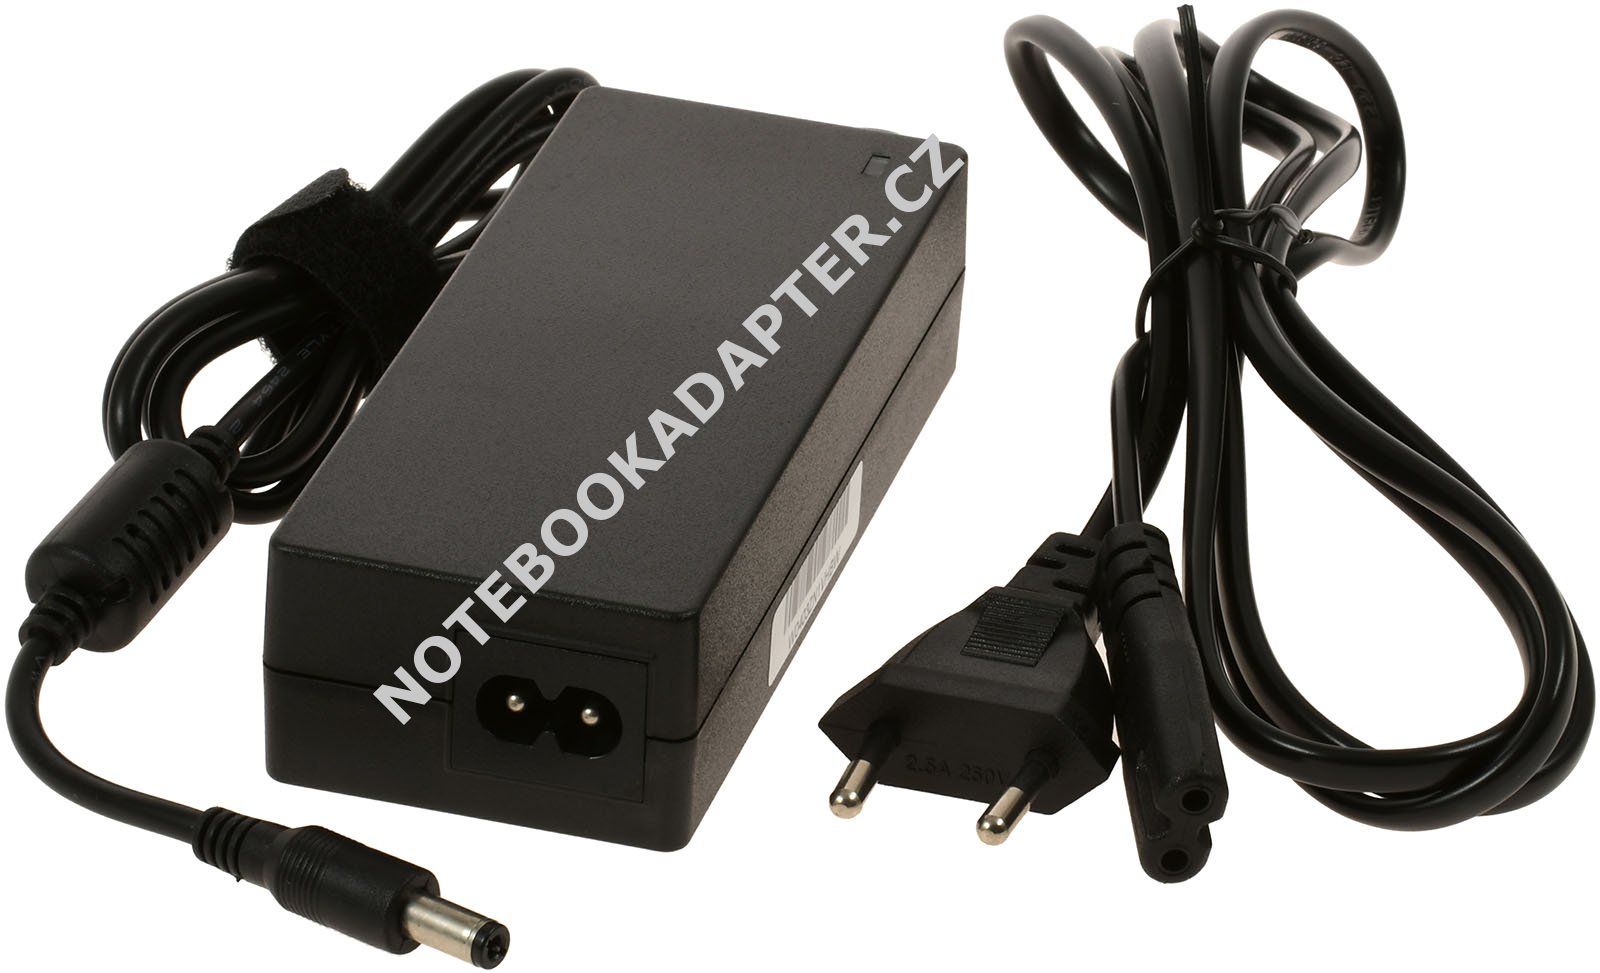 síťový adaptér pro DELL s konektorem 7,5mm x 5,0mm x 12,0mm